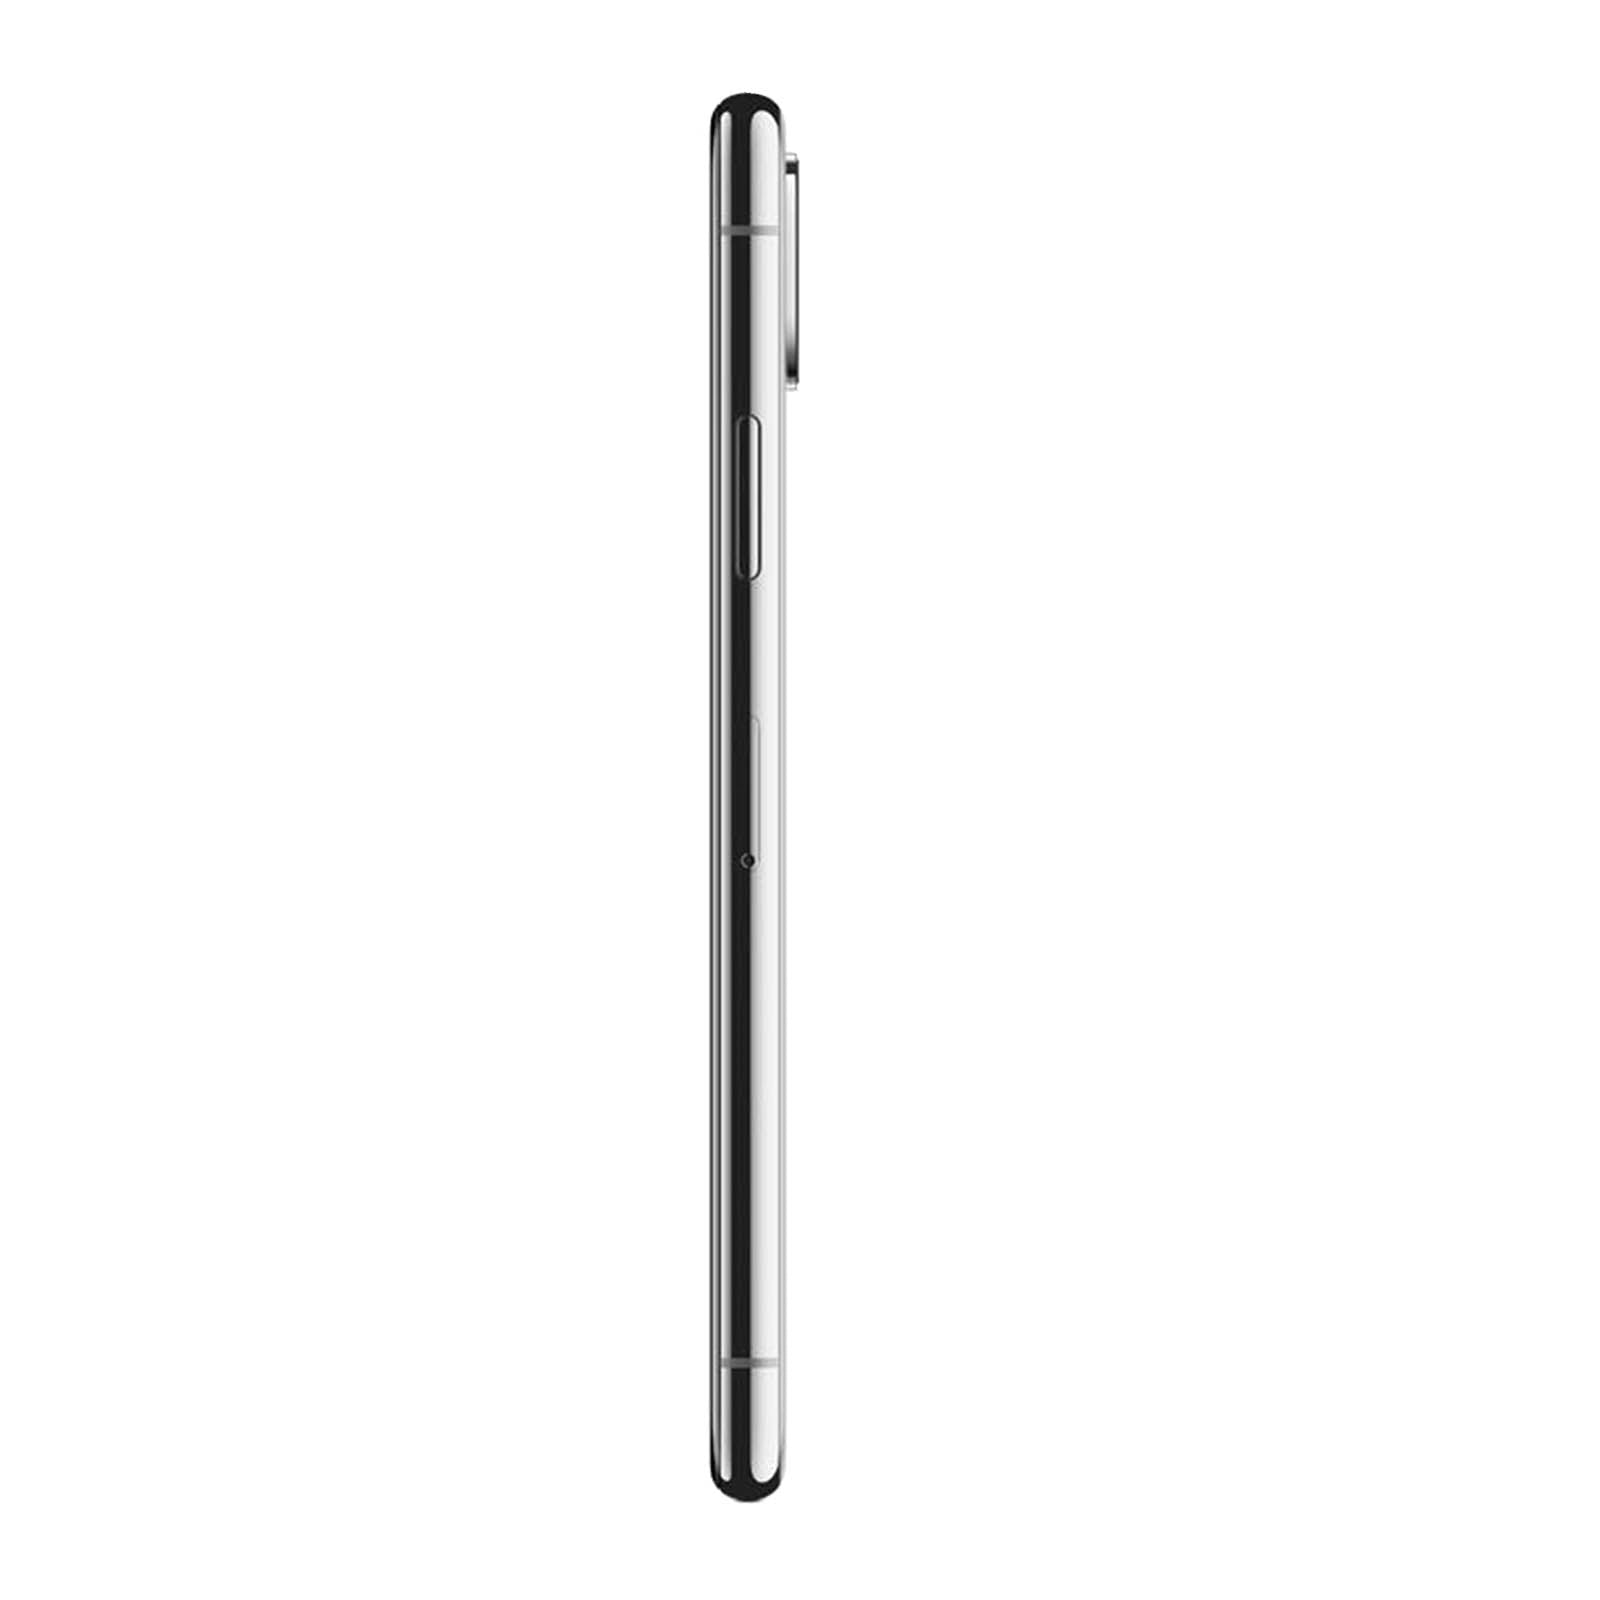 Apple iPhone XS 512GB Silver Fair - Unlocked